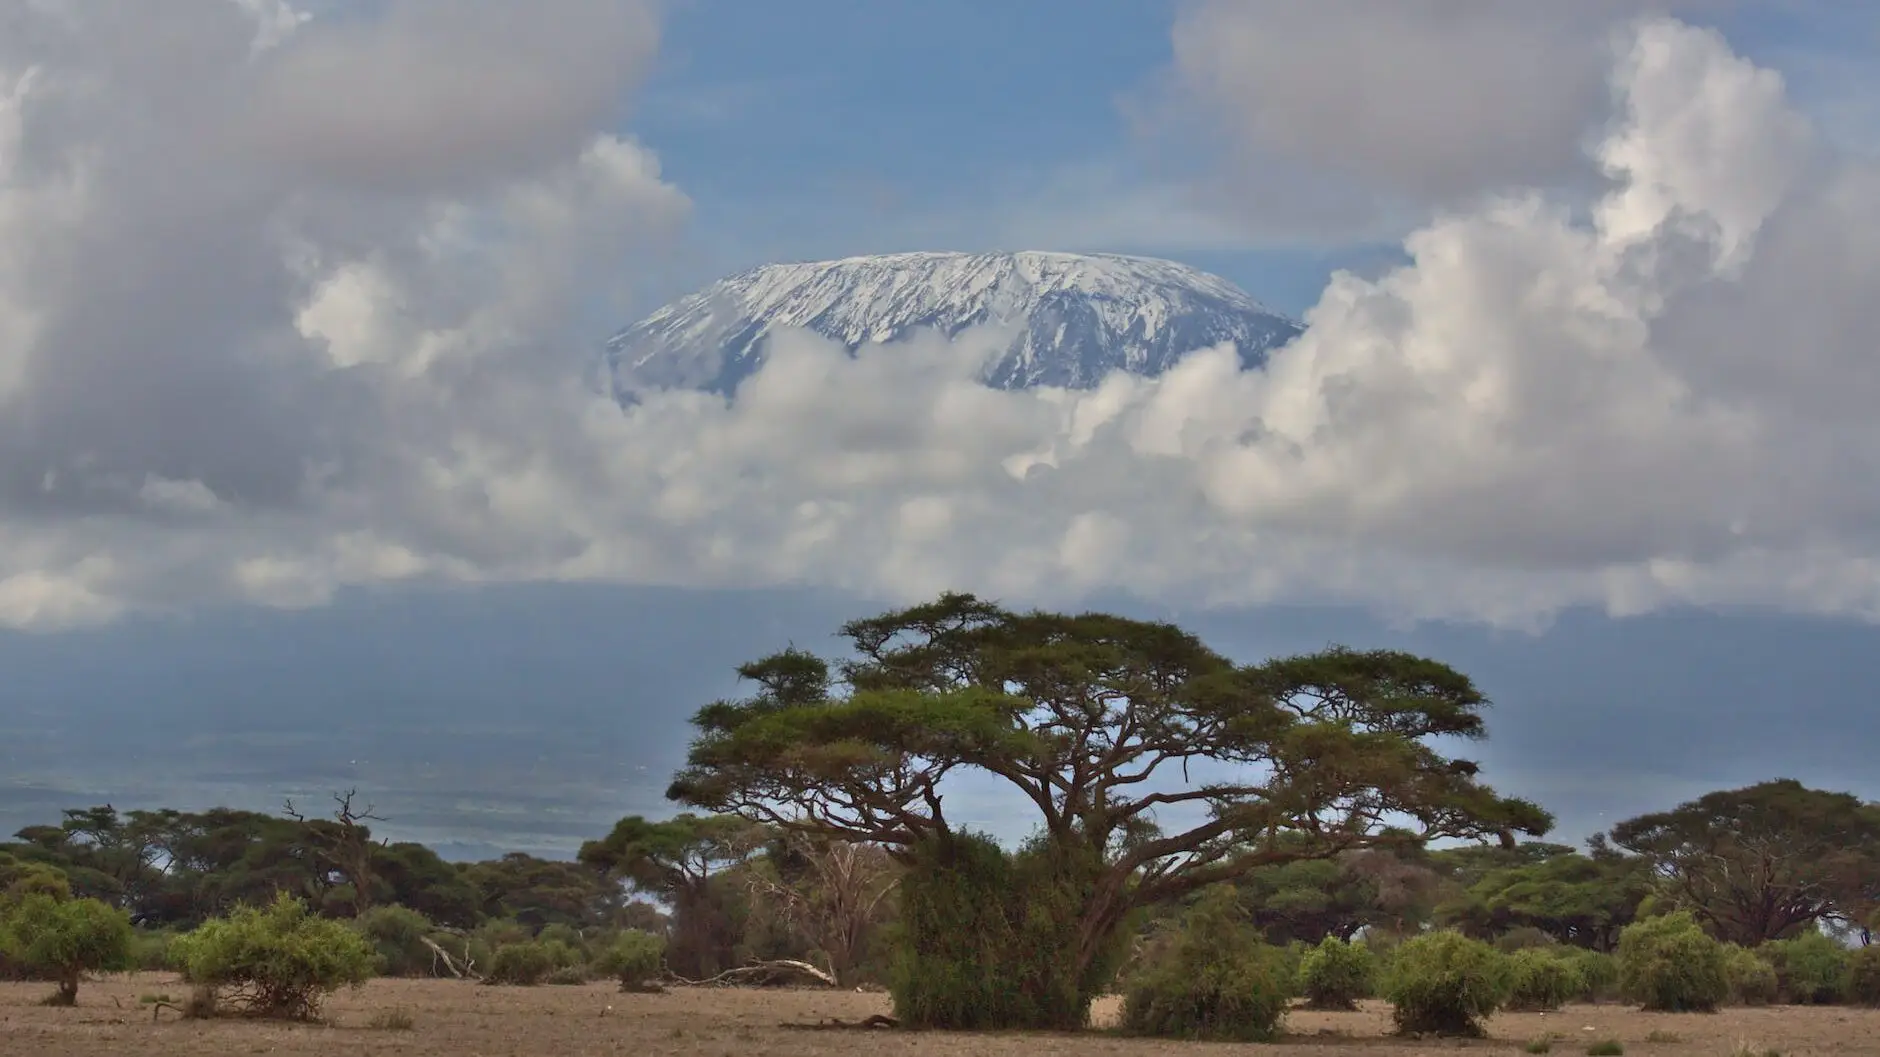 view of mount kilimanjaro the highest mountain of africa showing snow capped uhuru peak from amboseli national park kenya